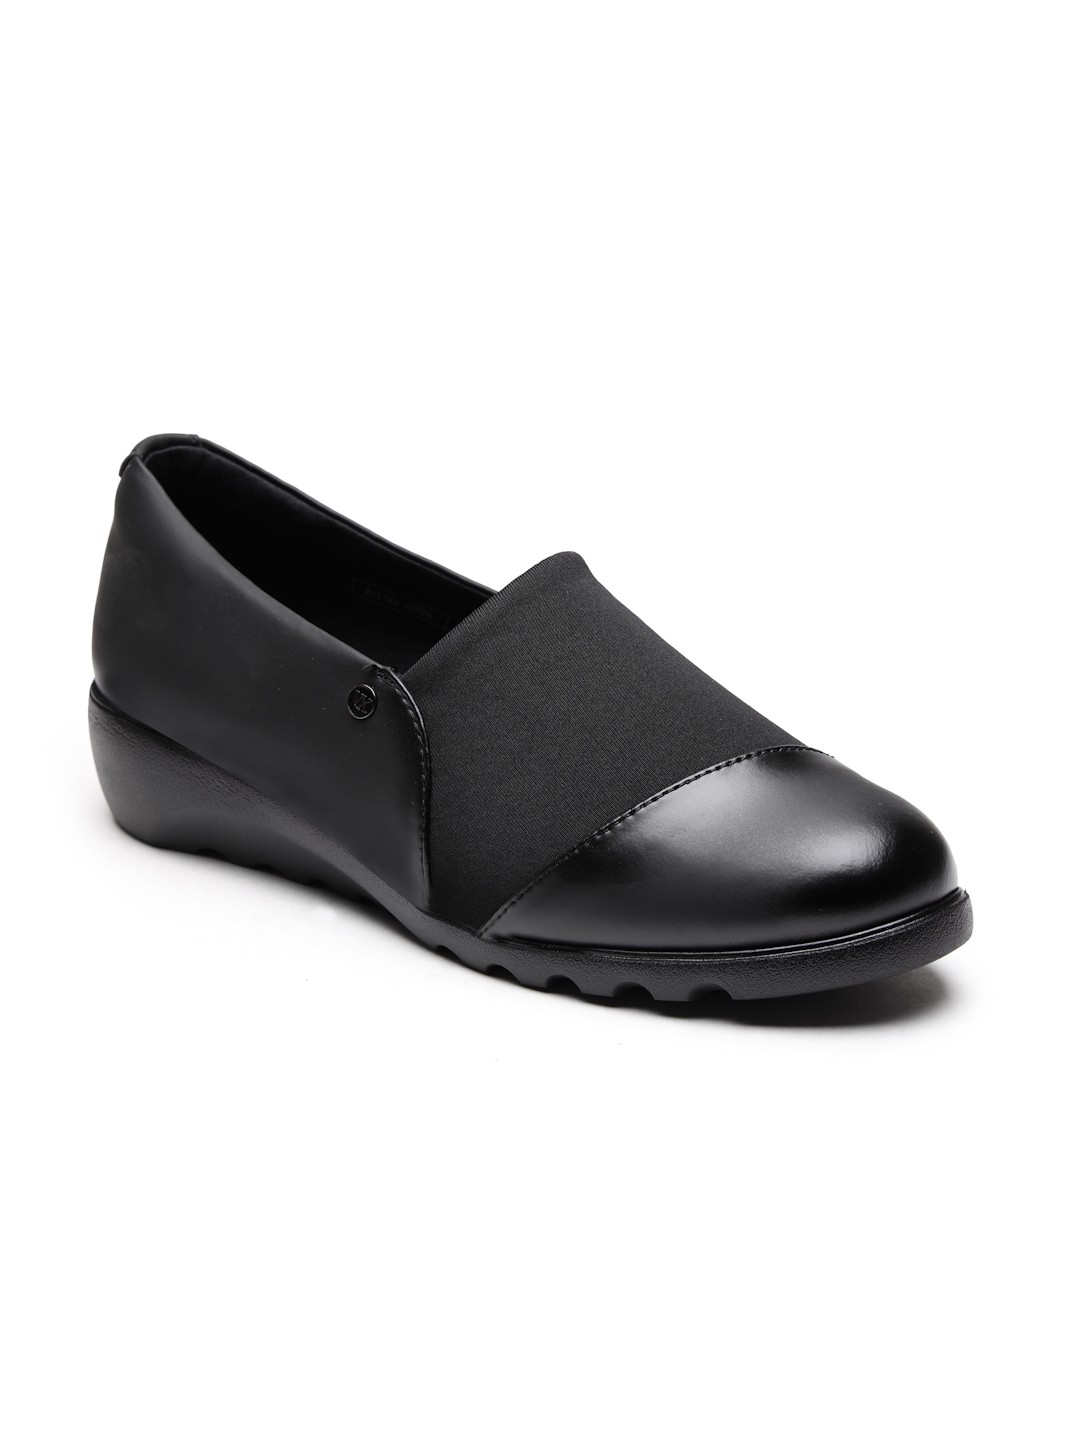 Buy Von Wellx Germany Comfort Women's Black Casual Shoes Ayla Online in Kolkata